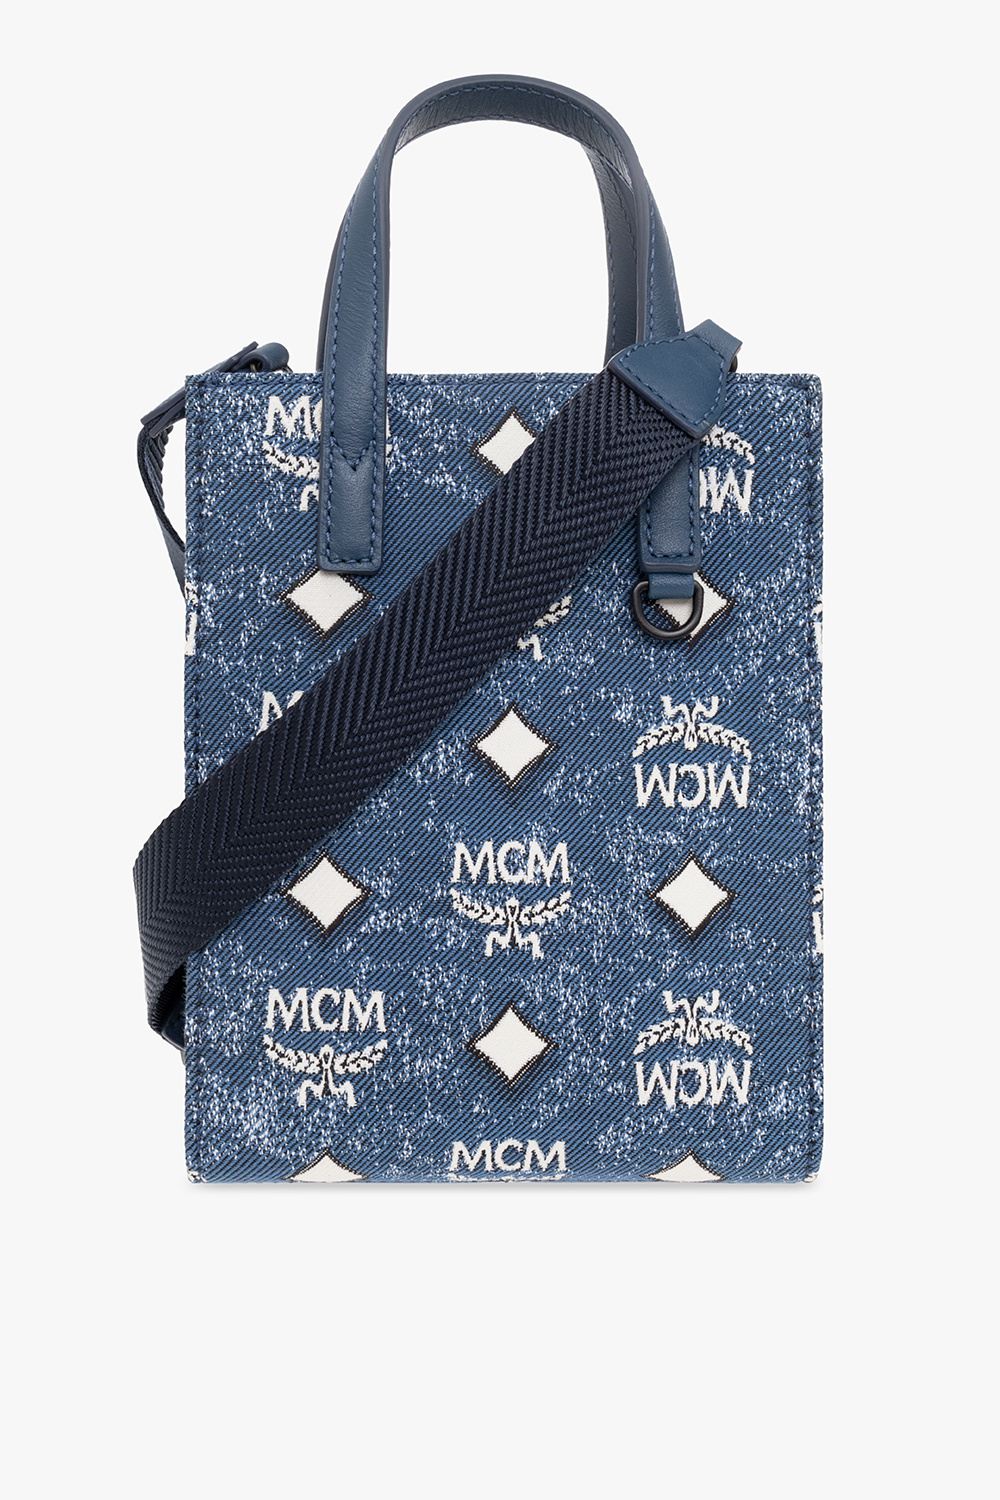 MCM White Blue Monogramed Purse Bag